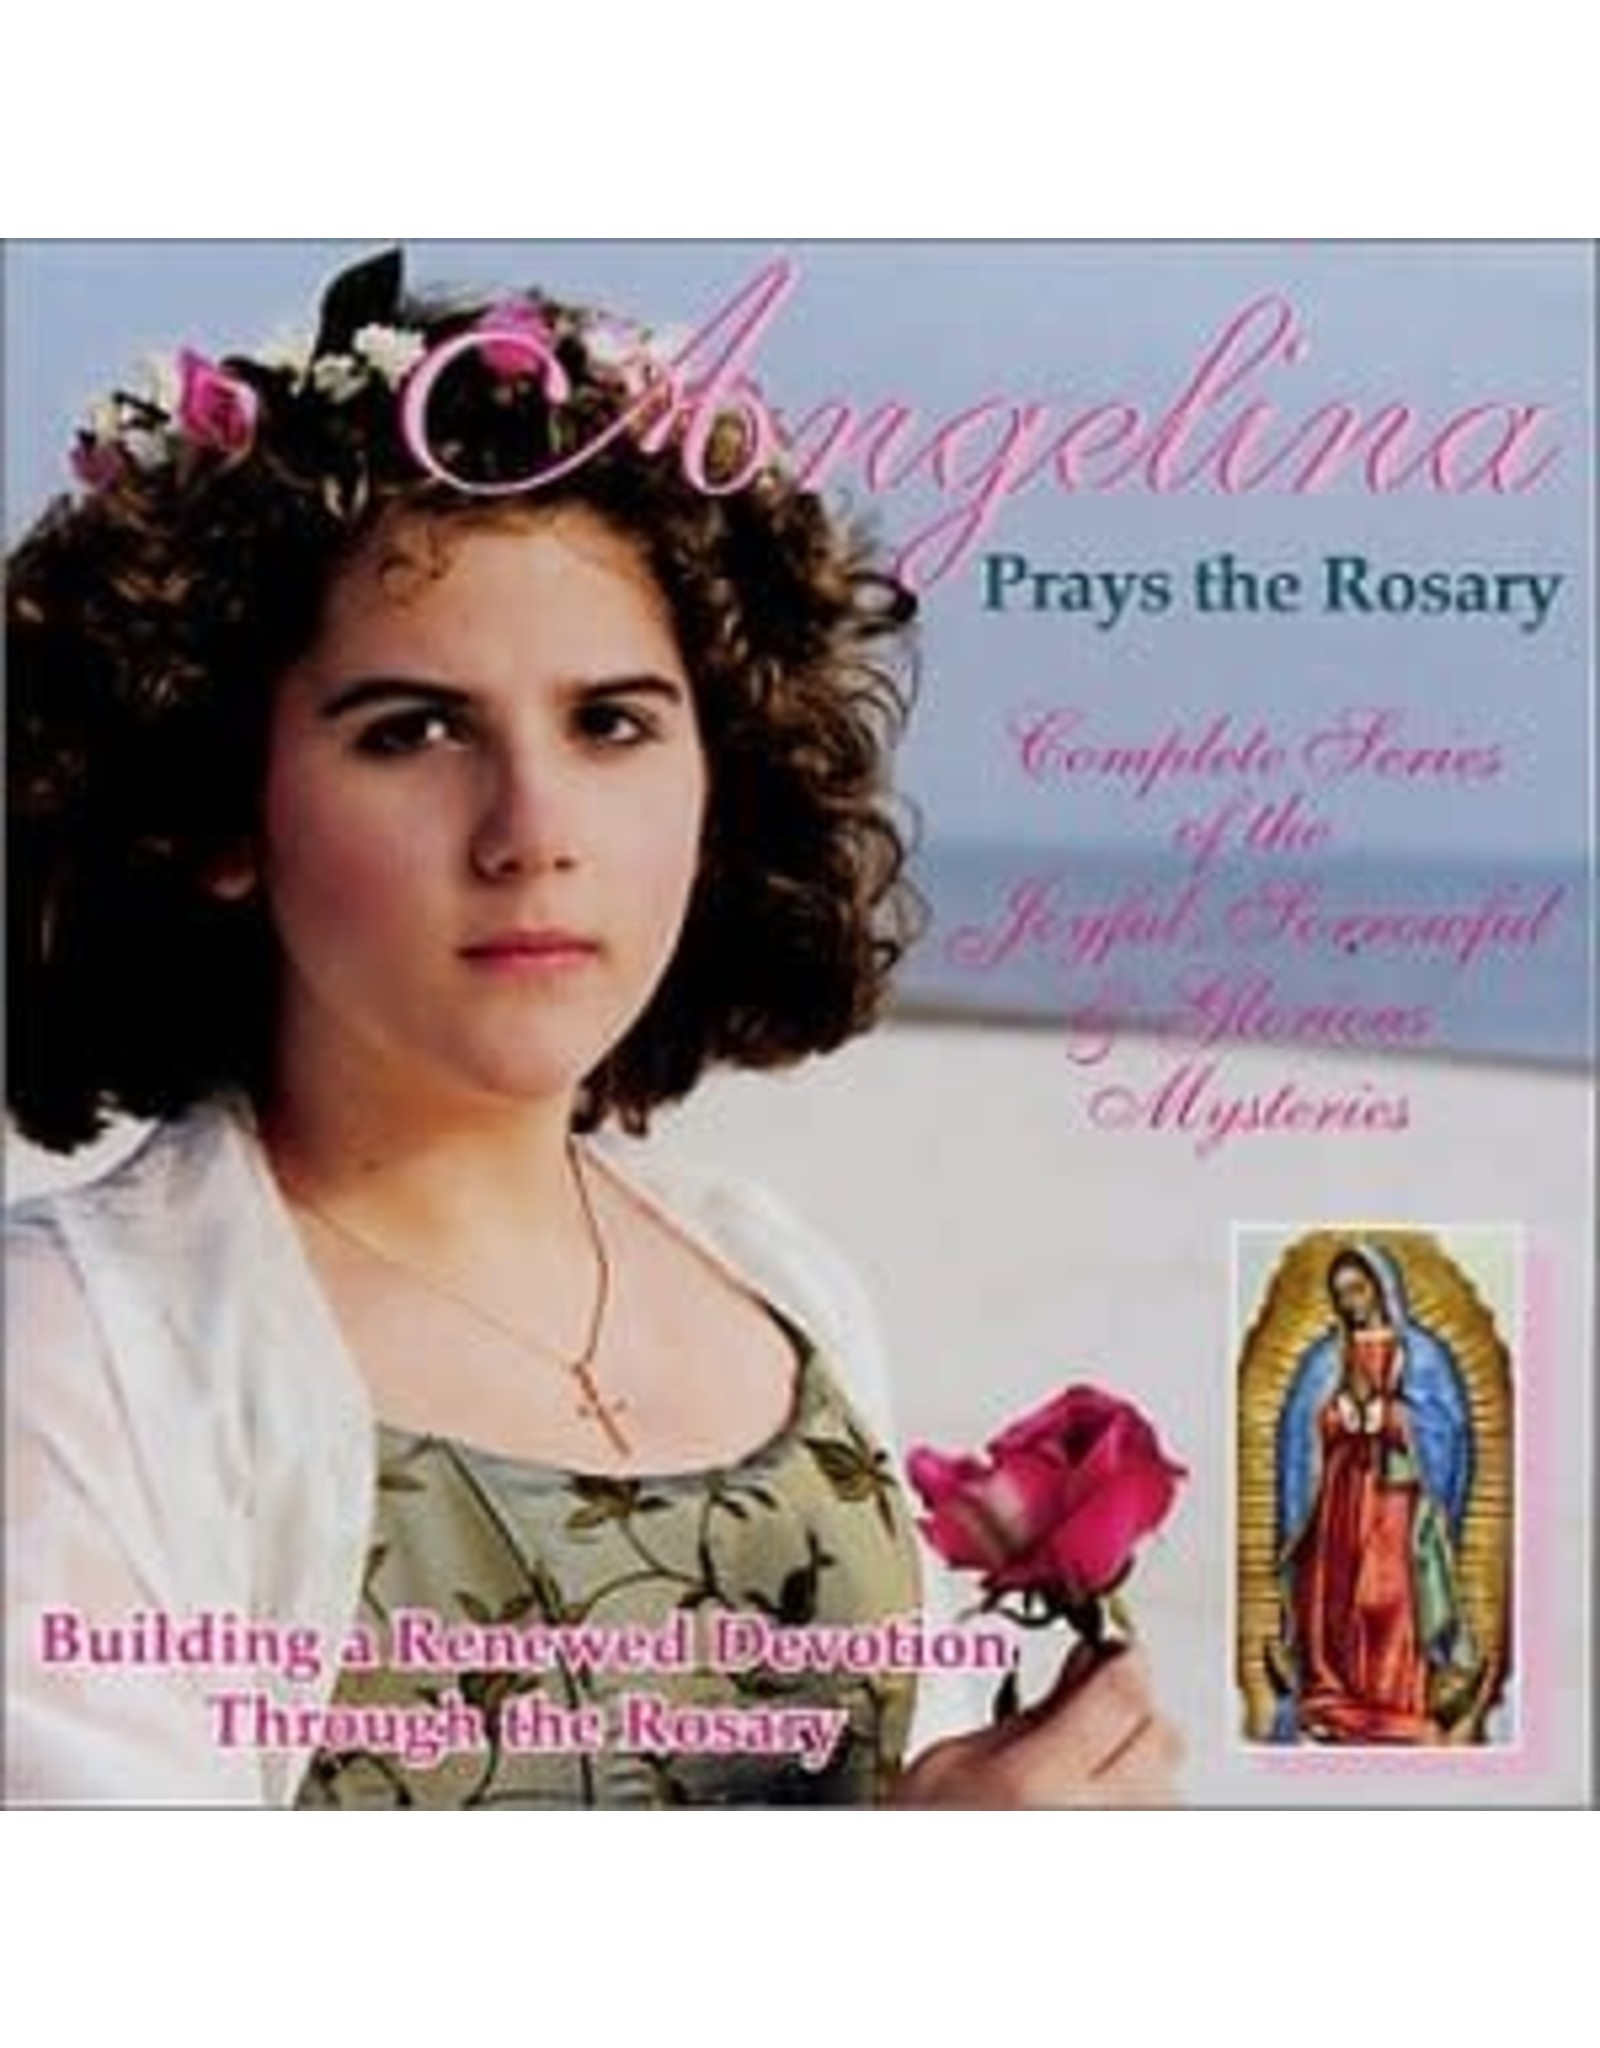 Angelina Prays the Rosary (2 CDs)